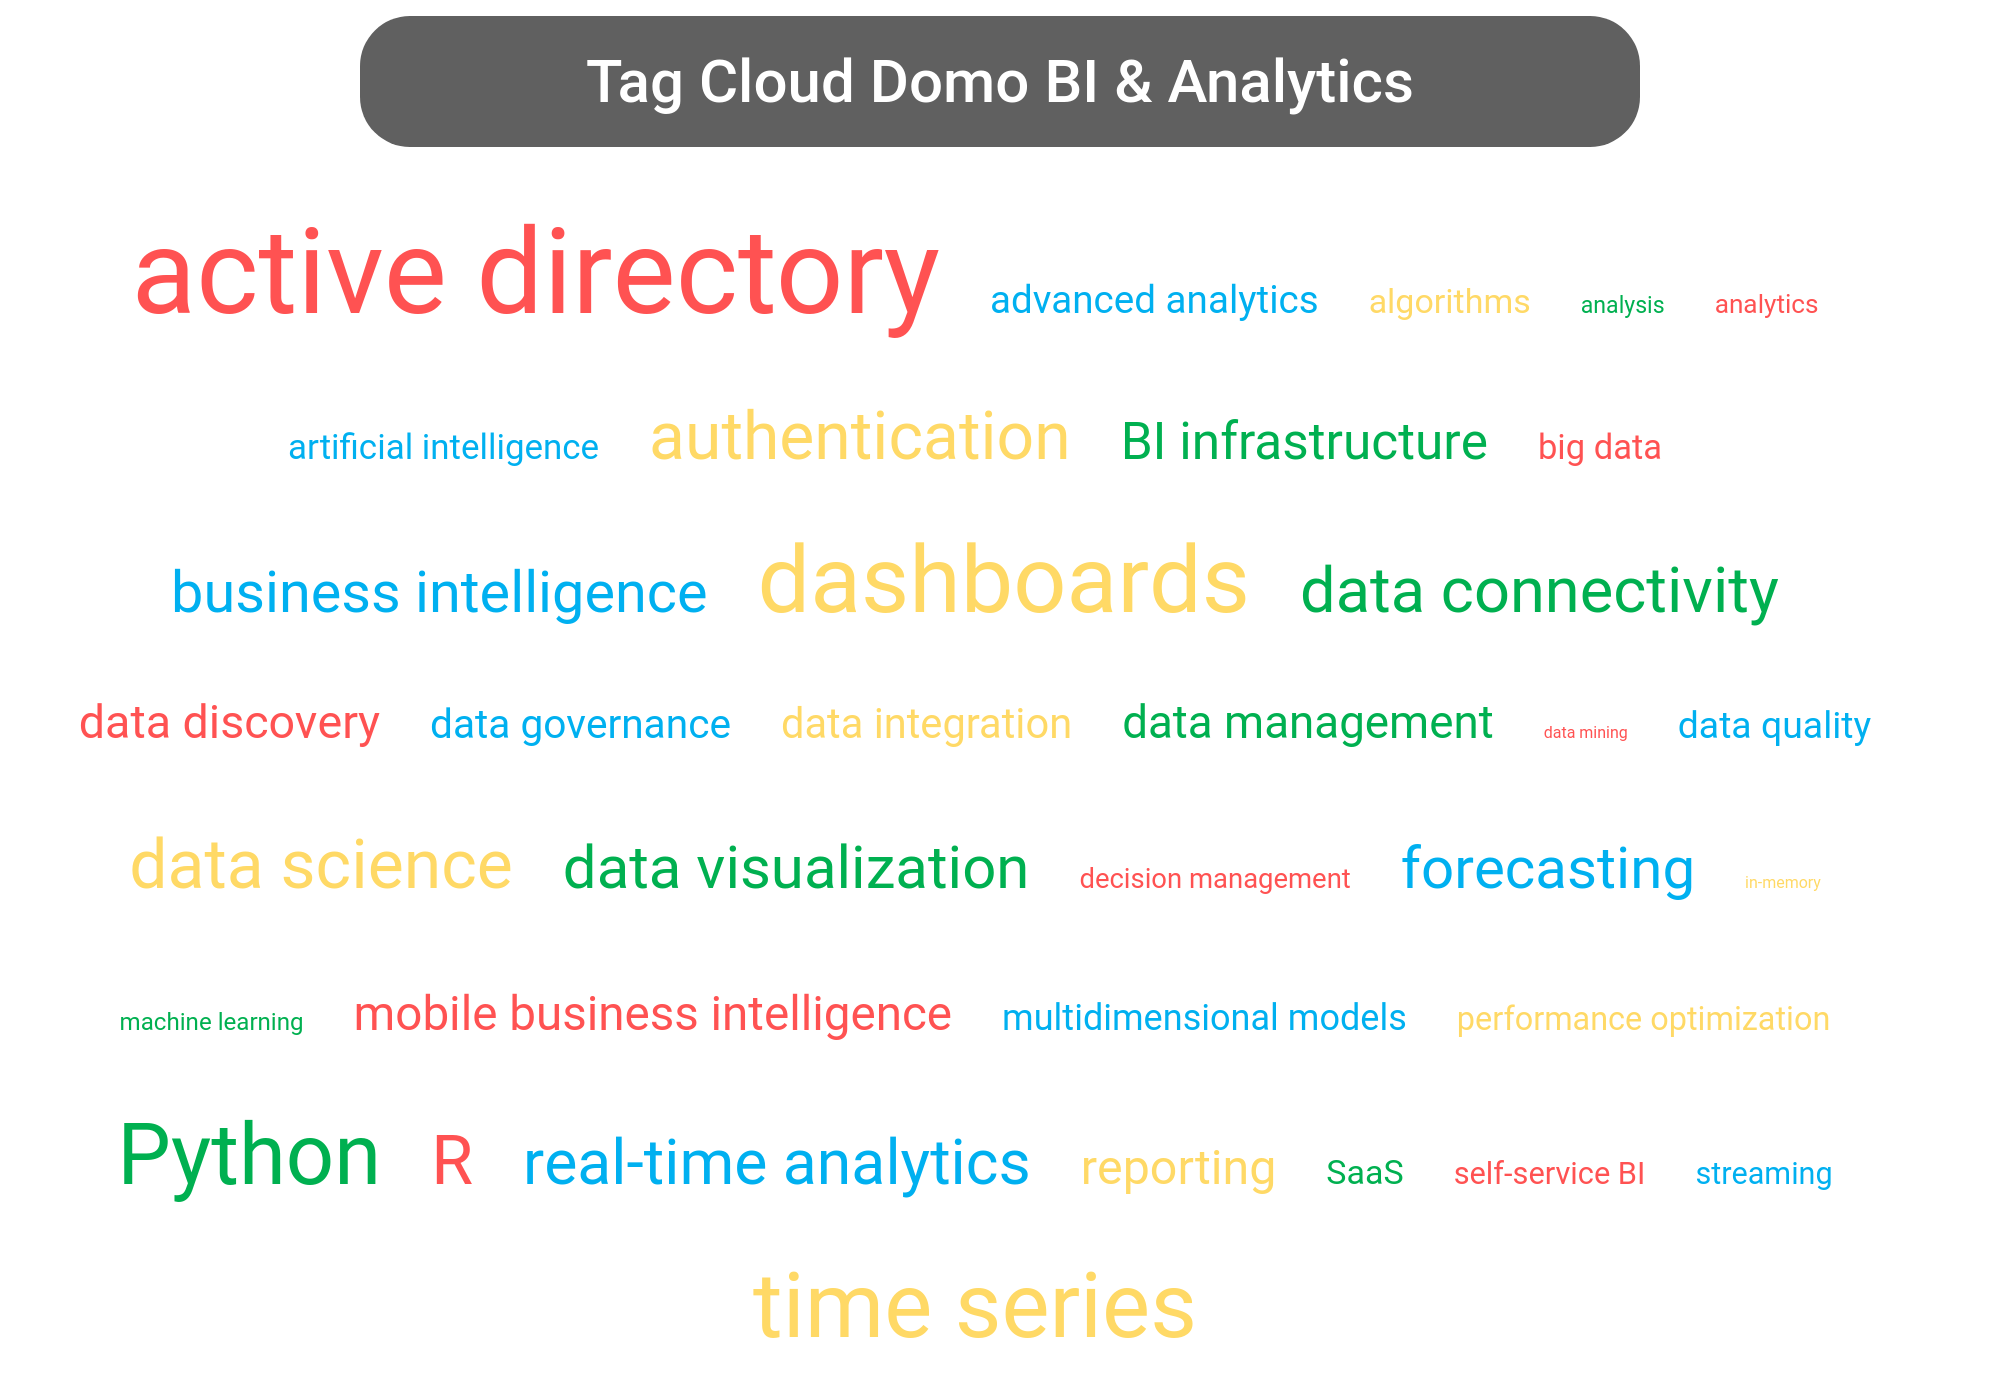 Tag cloud of the Domo Platform tools.